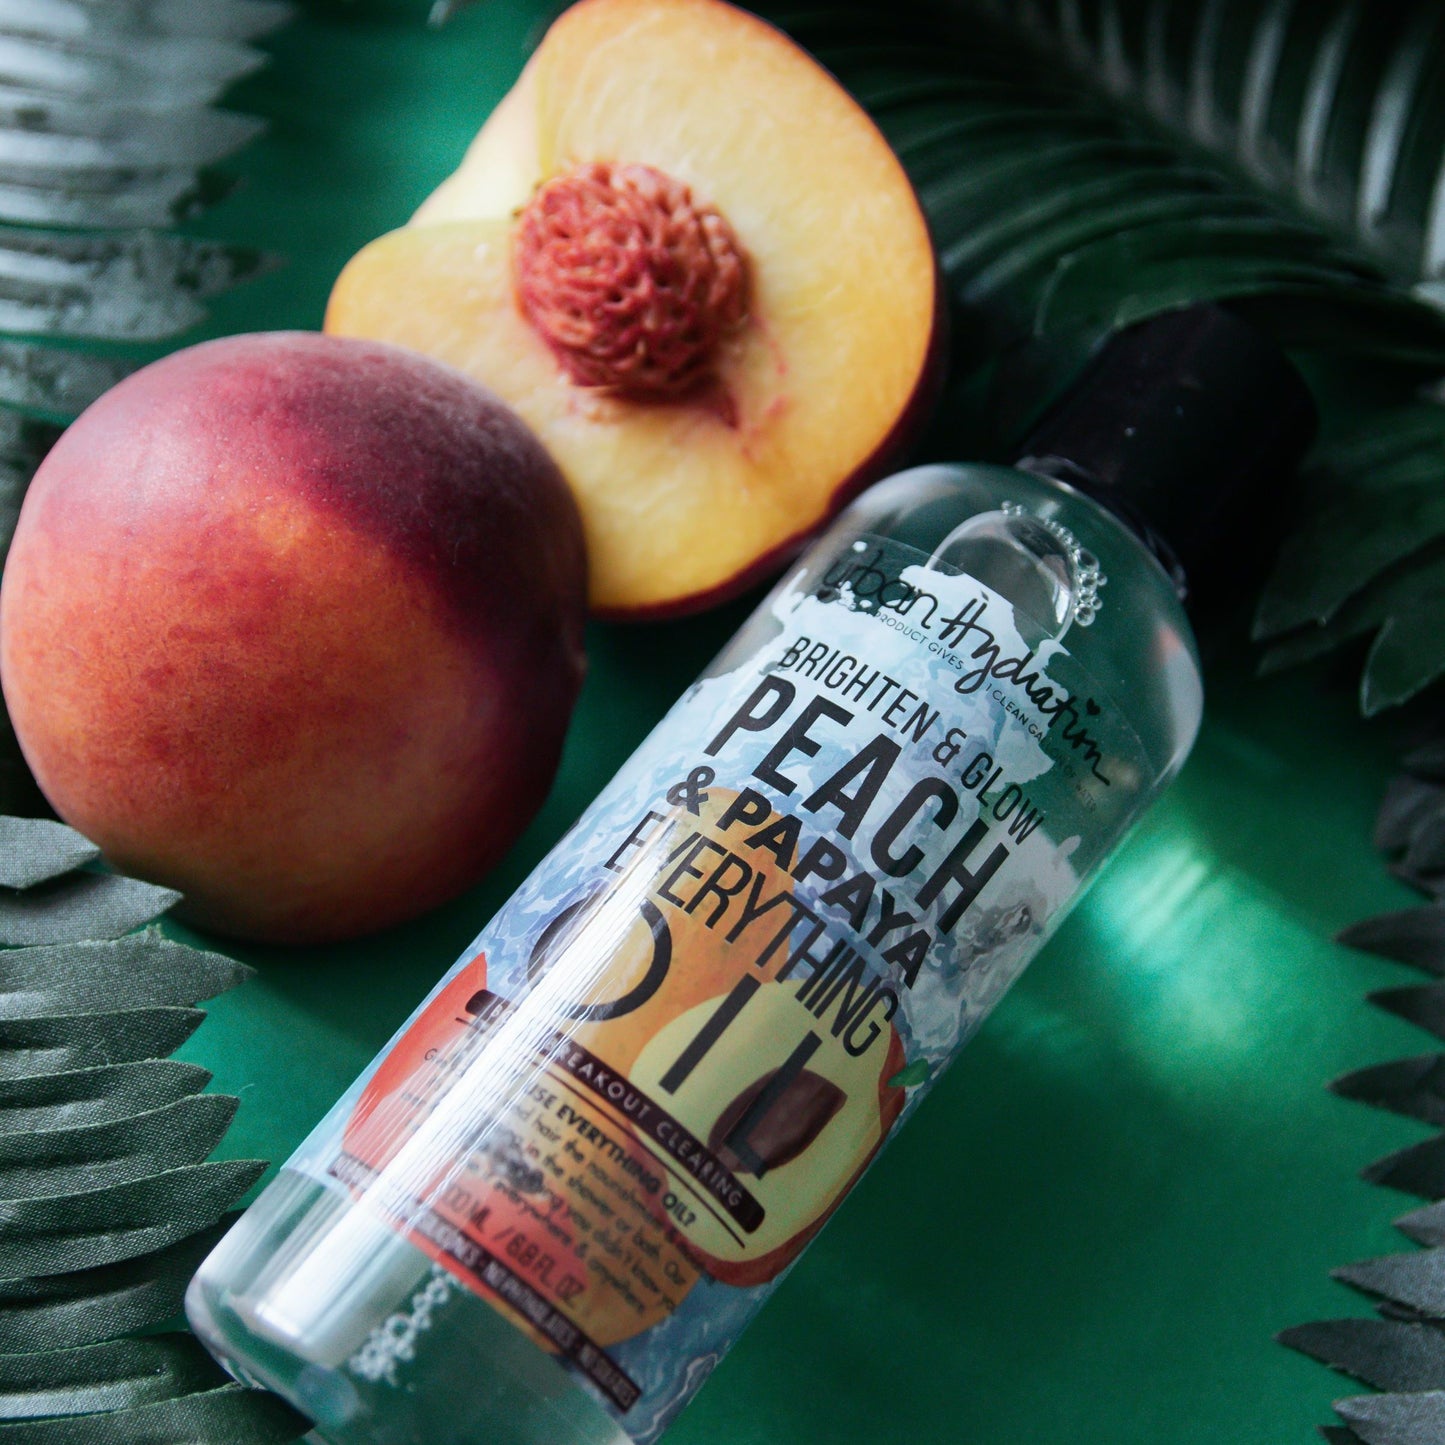 Peach Essential Oil 10ML – Sunee Wellness